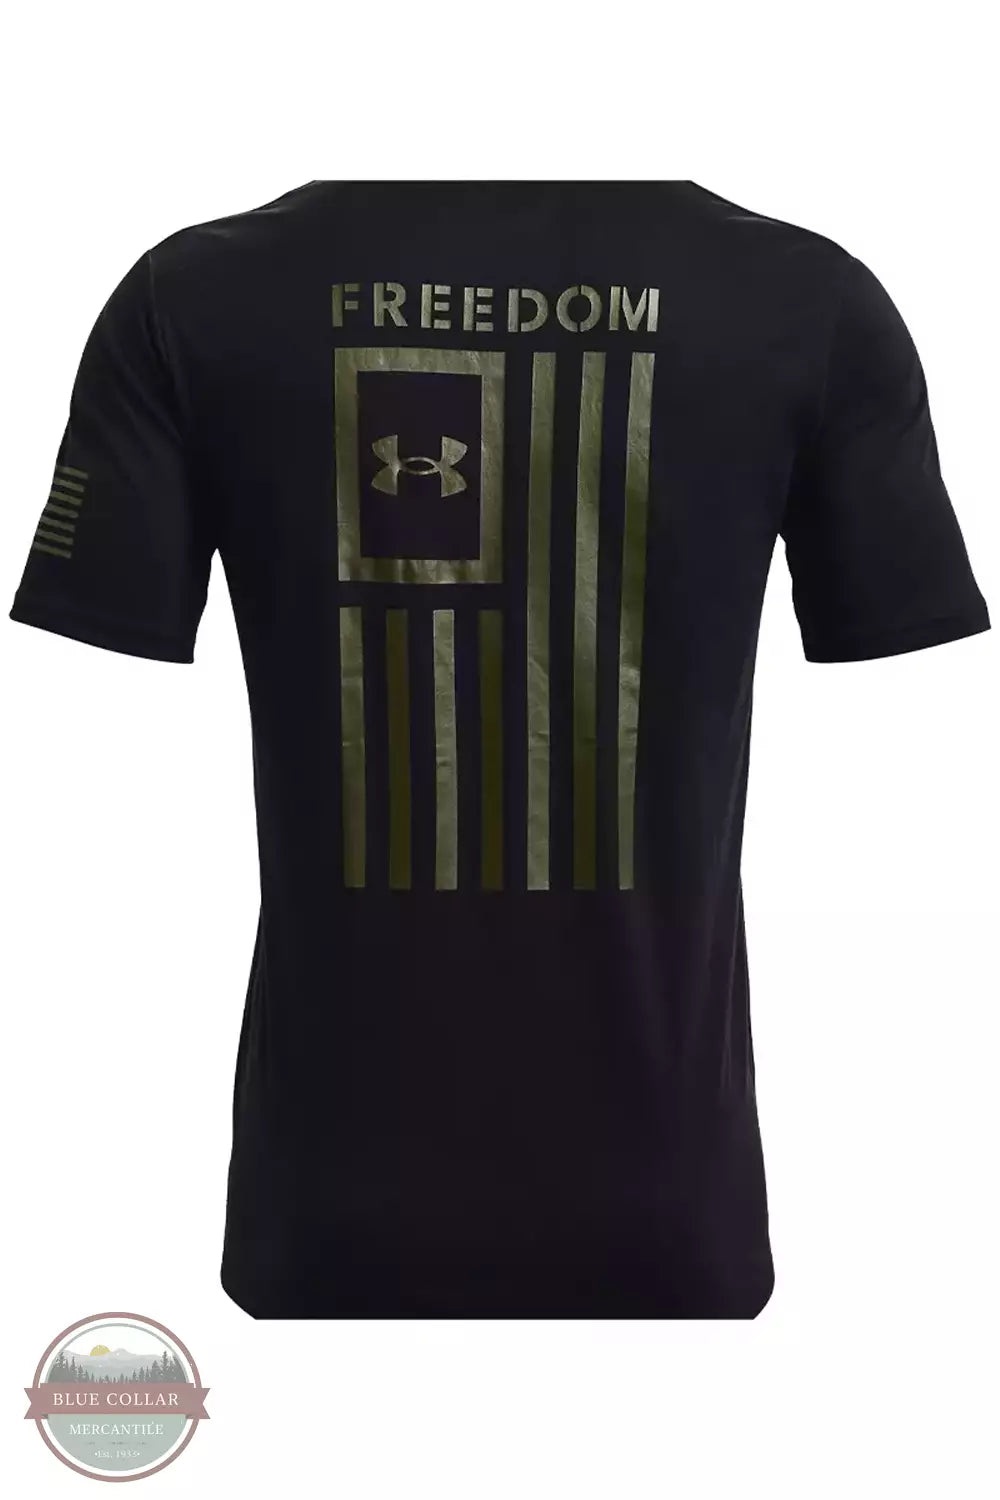 Under Armour 1370810 Men's UA Freedom Flag T-Shirt Black / Marine Green Back View